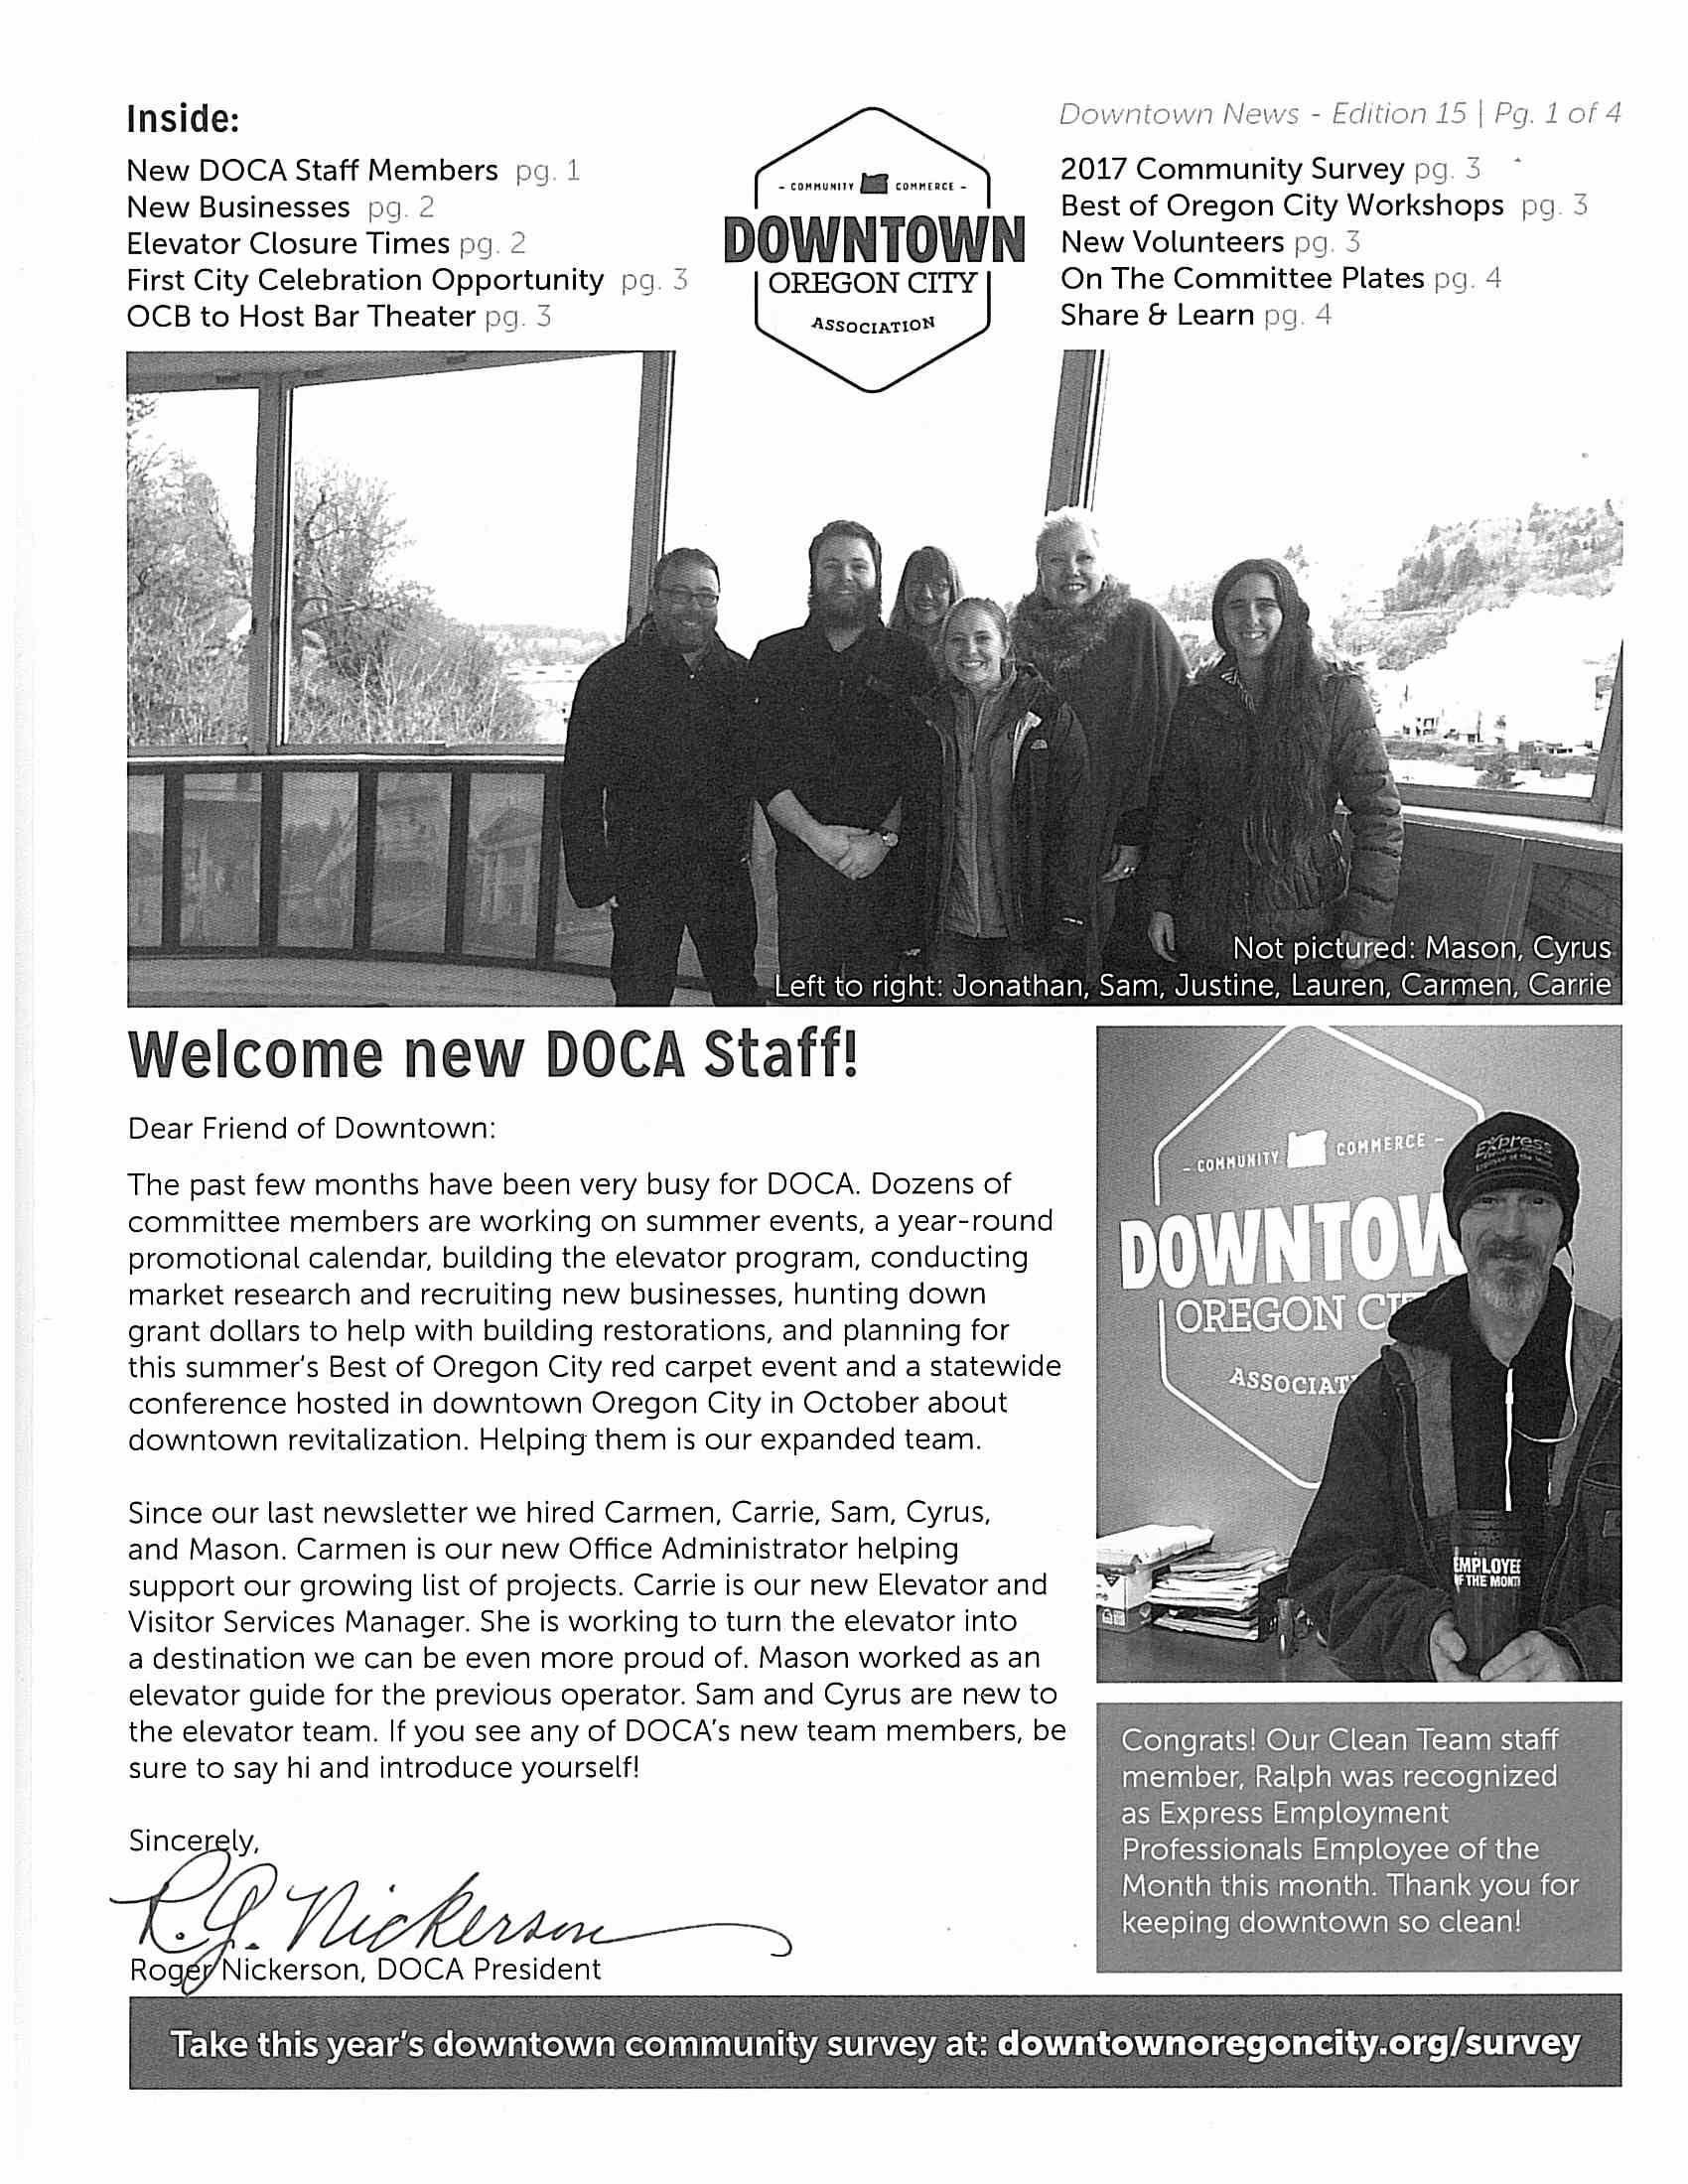 Downtown Oregon City Association Newsletter